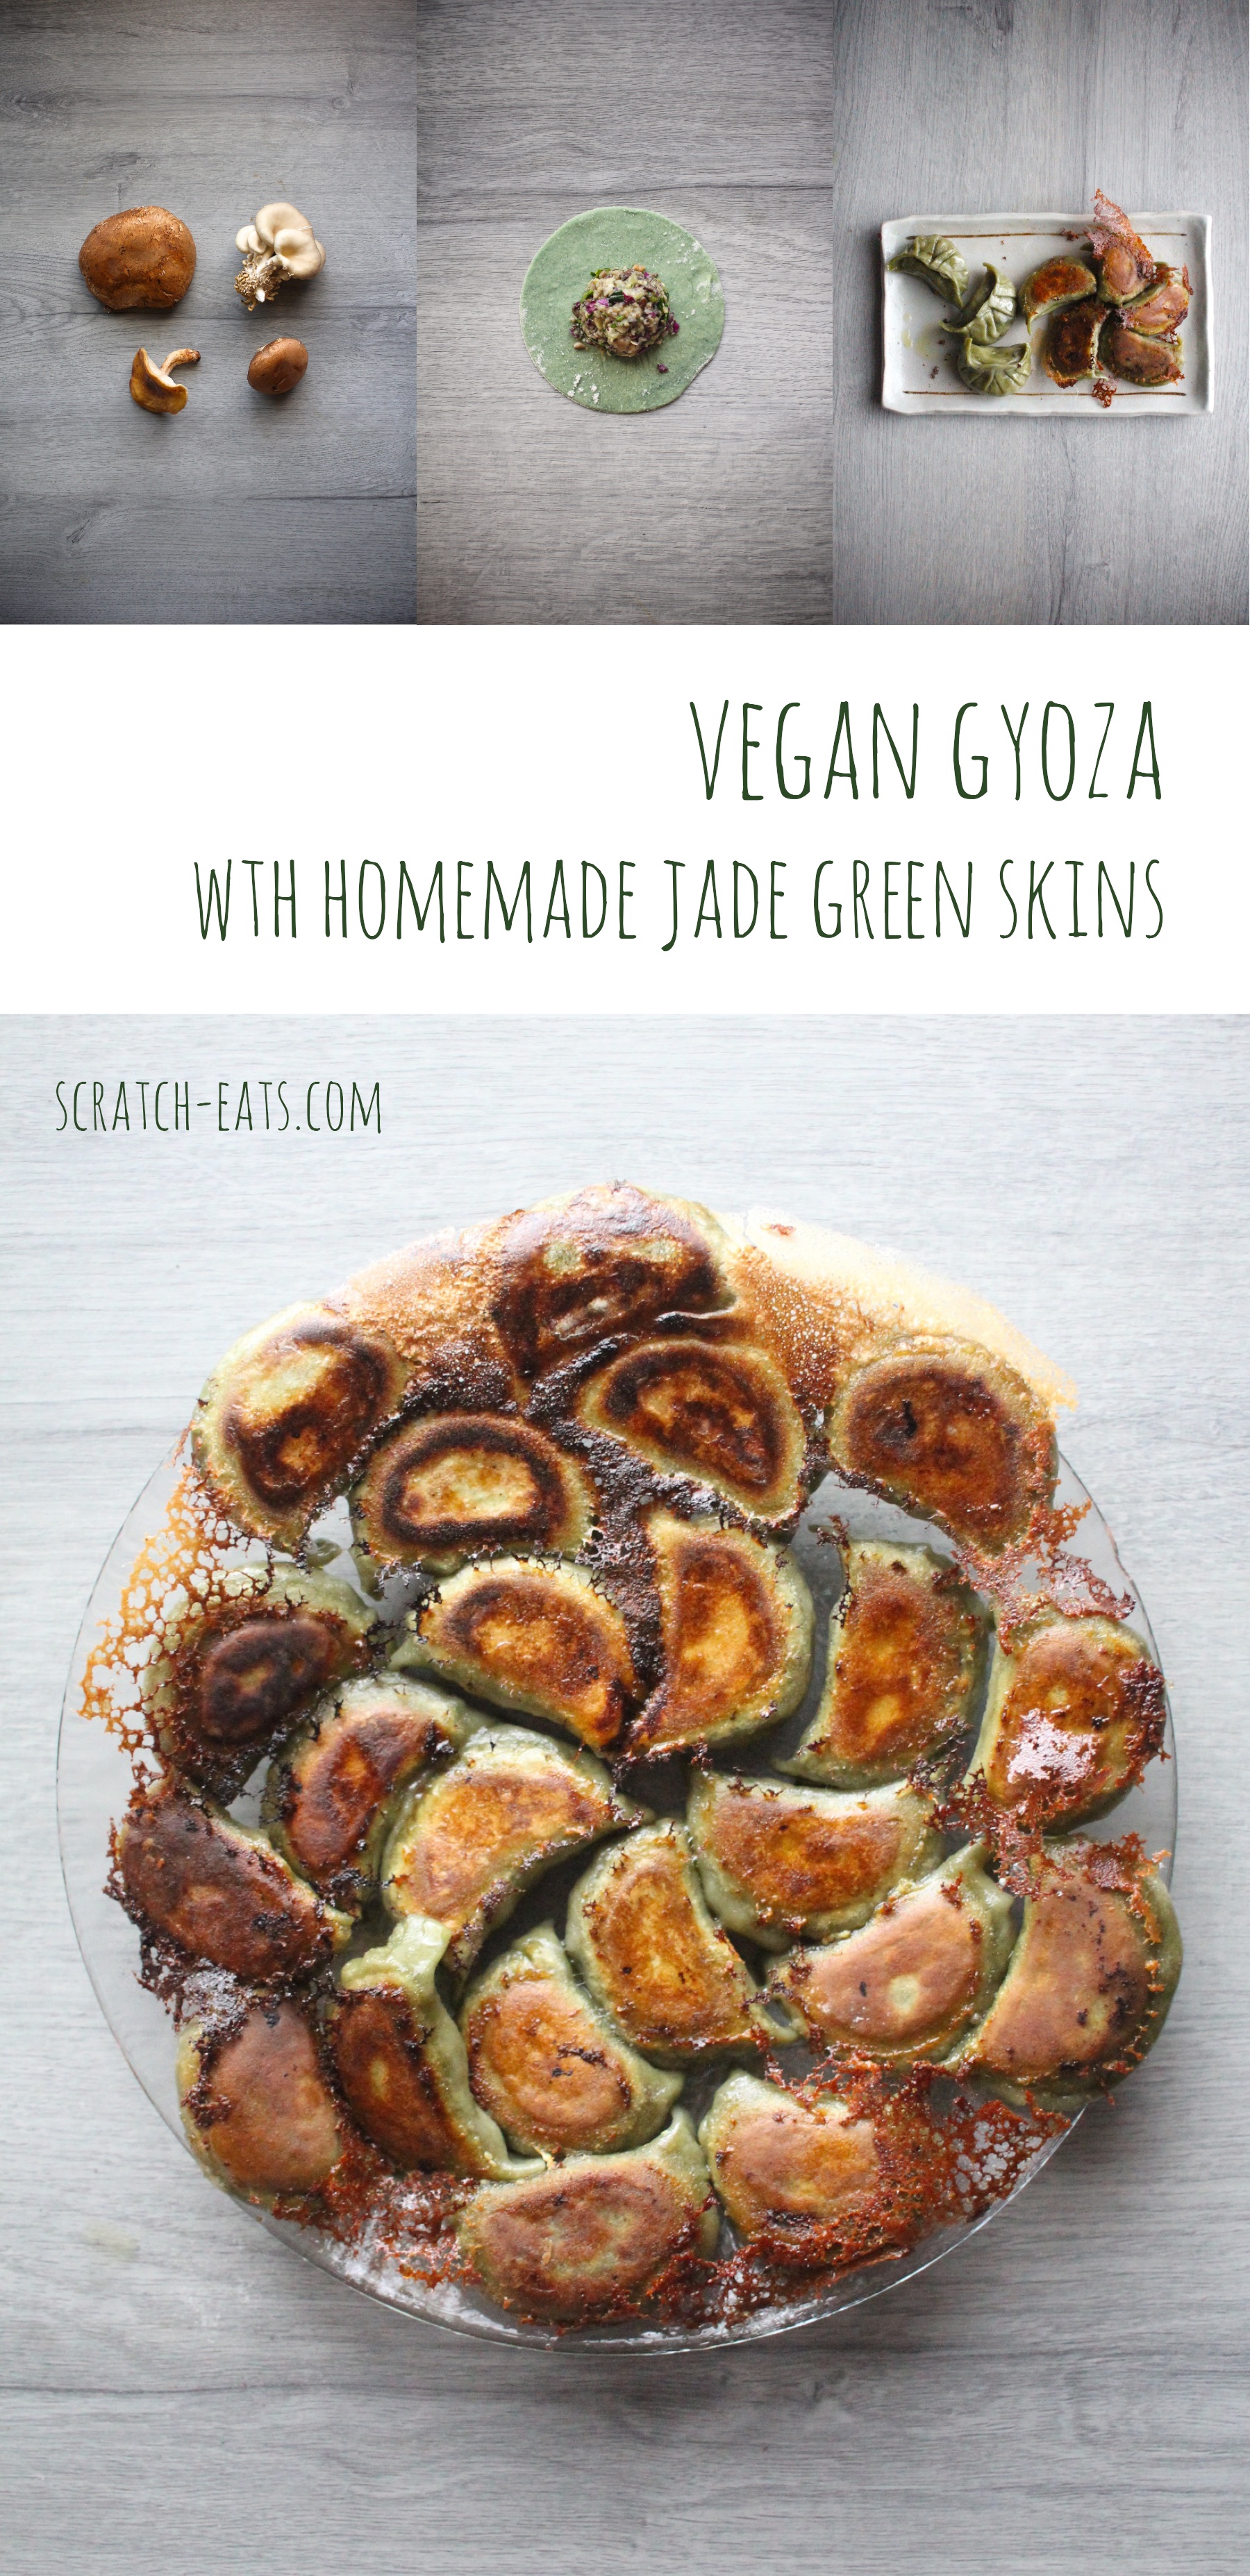 vegan gyoza with jade green skins